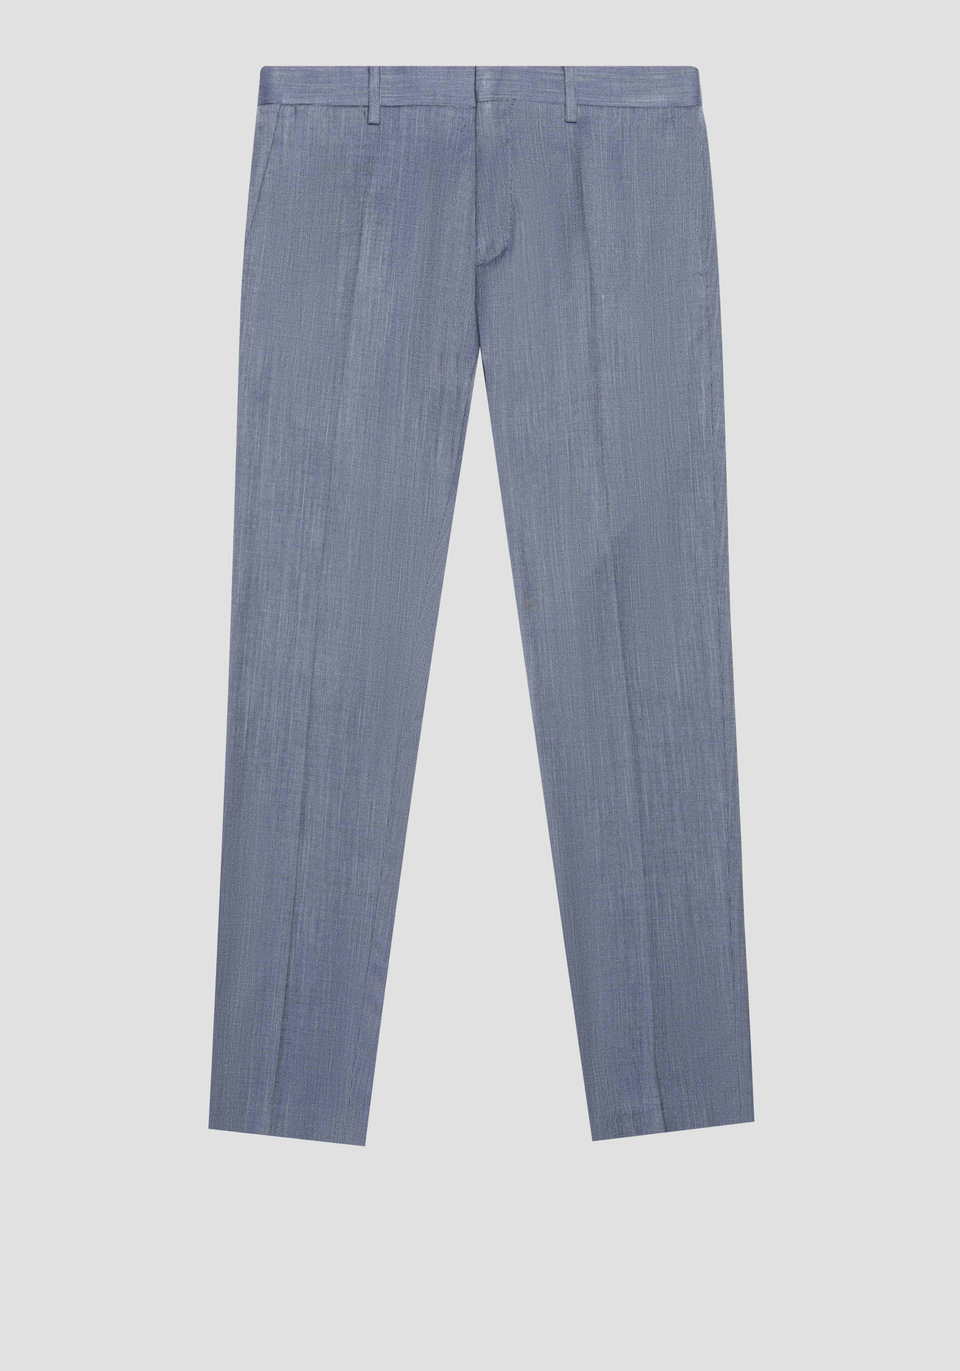 SLIM FIT "BONNIE" PANTS IN VISCOSE BLEND FABRIC WITH SLUB EFFECT - Antony Morato Online Shop